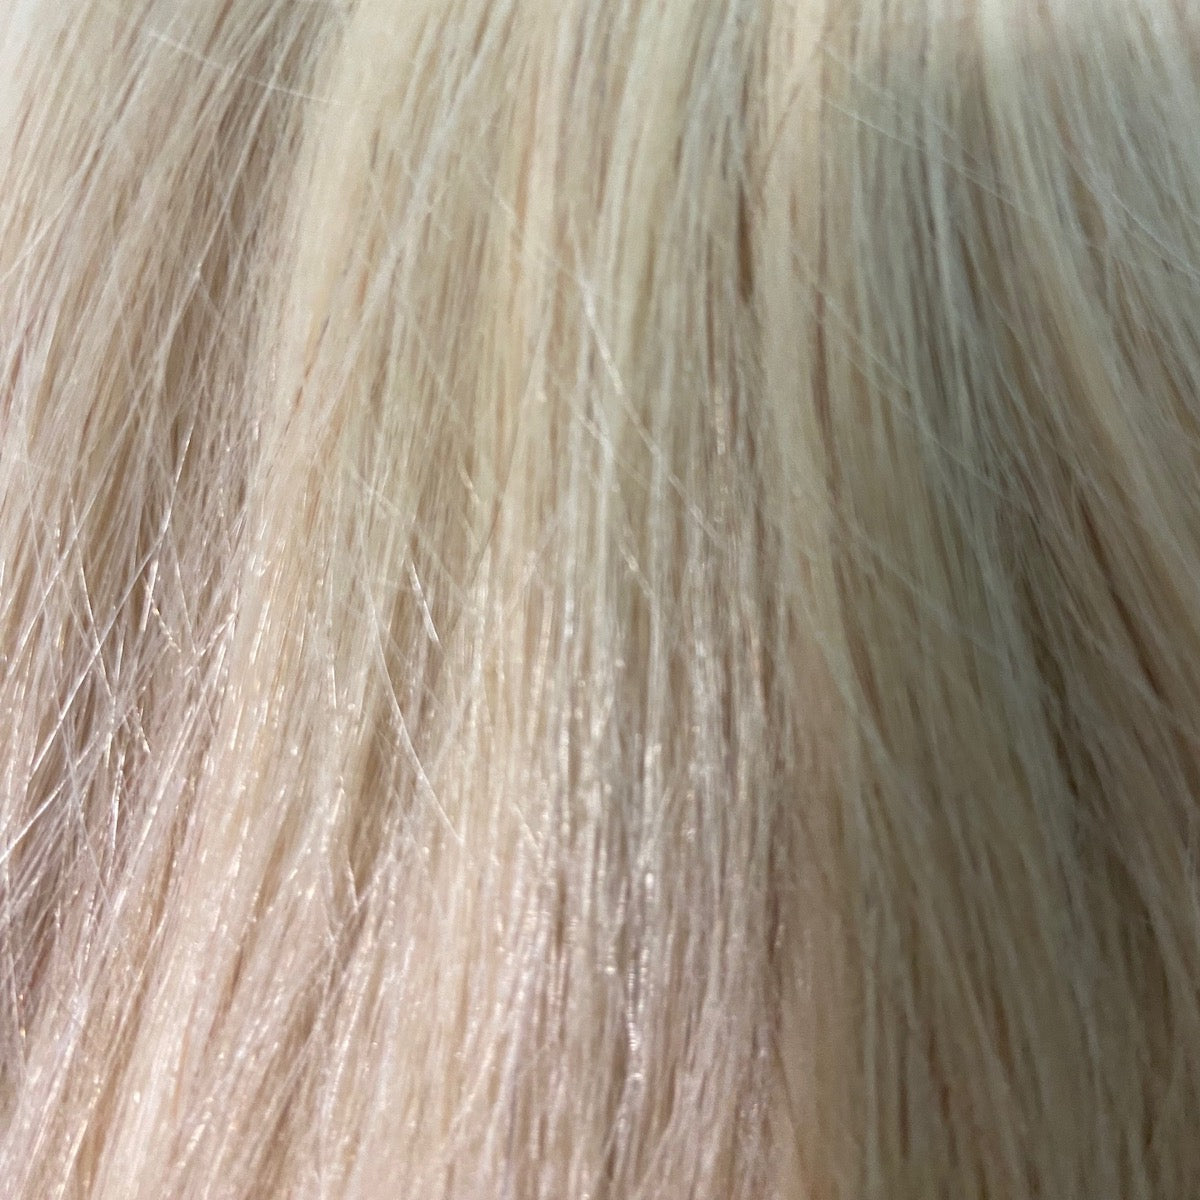 K-Tip 20" 25g Professional Hair Extensions - #19 Desert Blonde